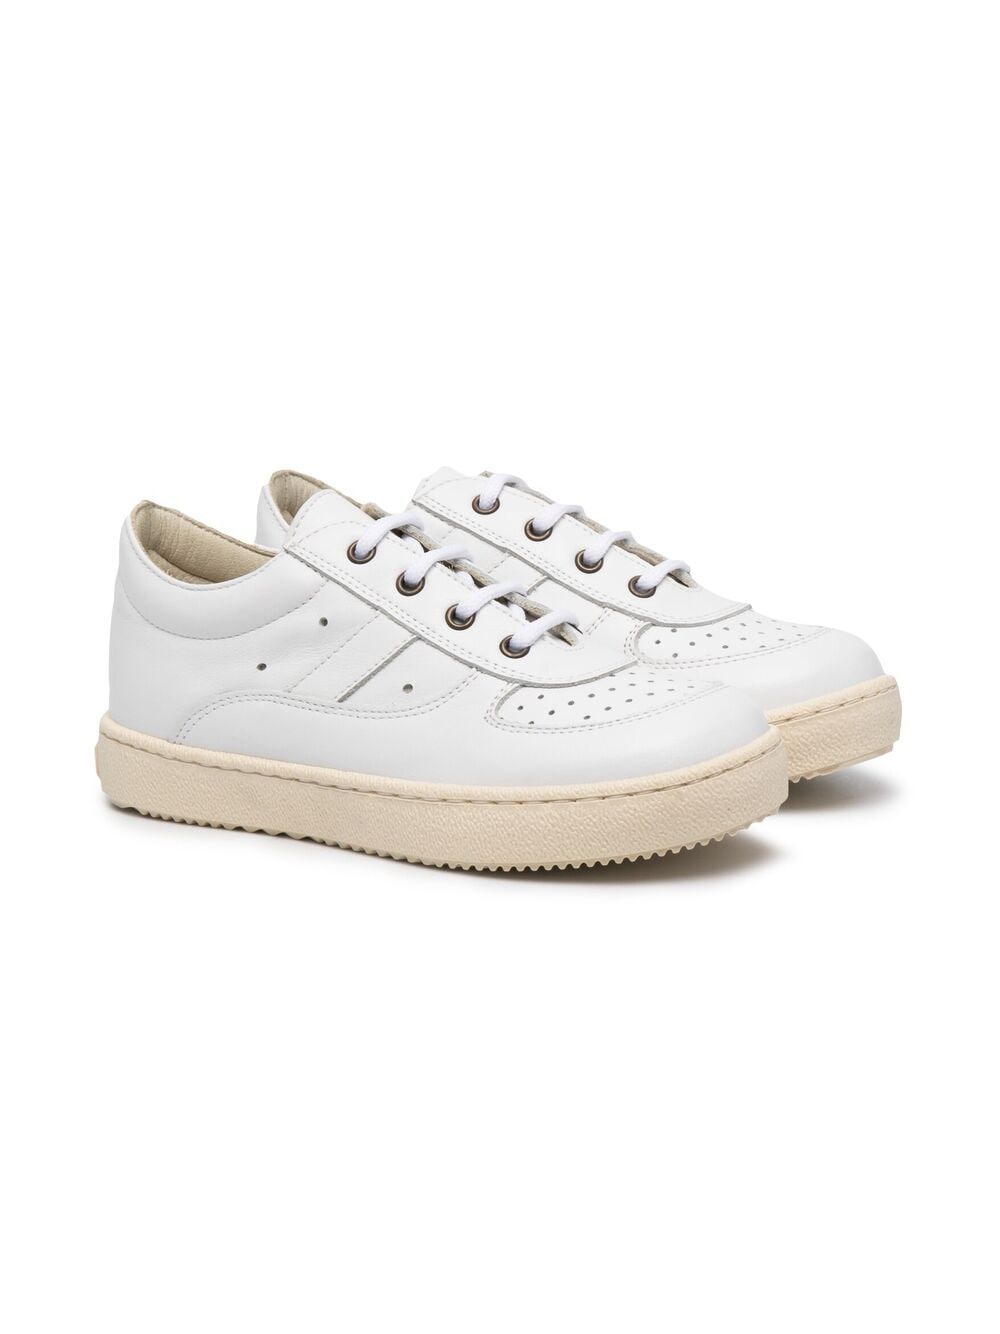 Pèpè lace-up leather sneakers - White von Pèpè